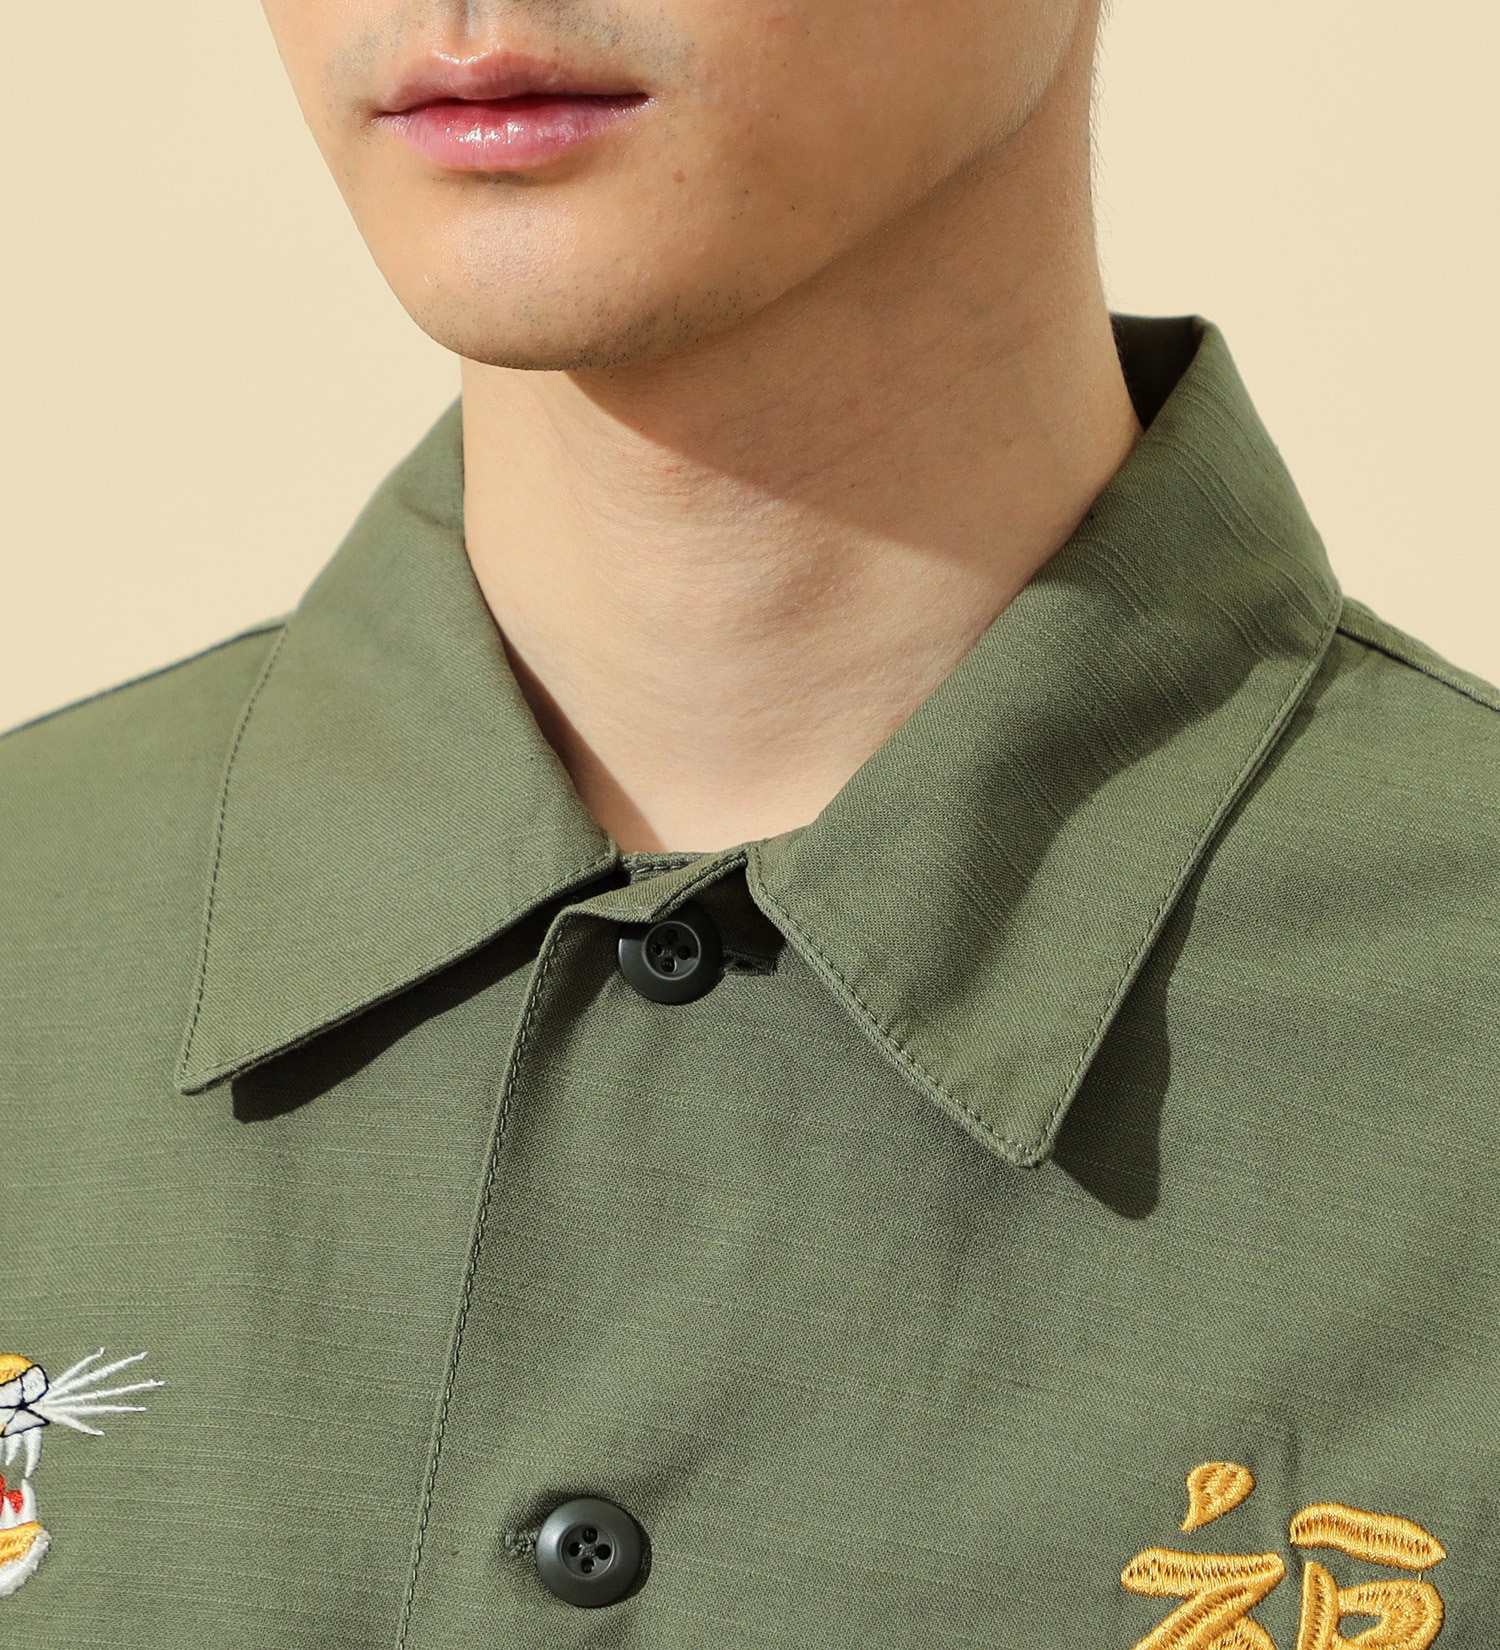 ALPHA(アルファ)のユーティリティシャツ/ベトジャン刺繍 長袖（VIETNAM）|トップス/シャツ/ブラウス/メンズ|オリーブ